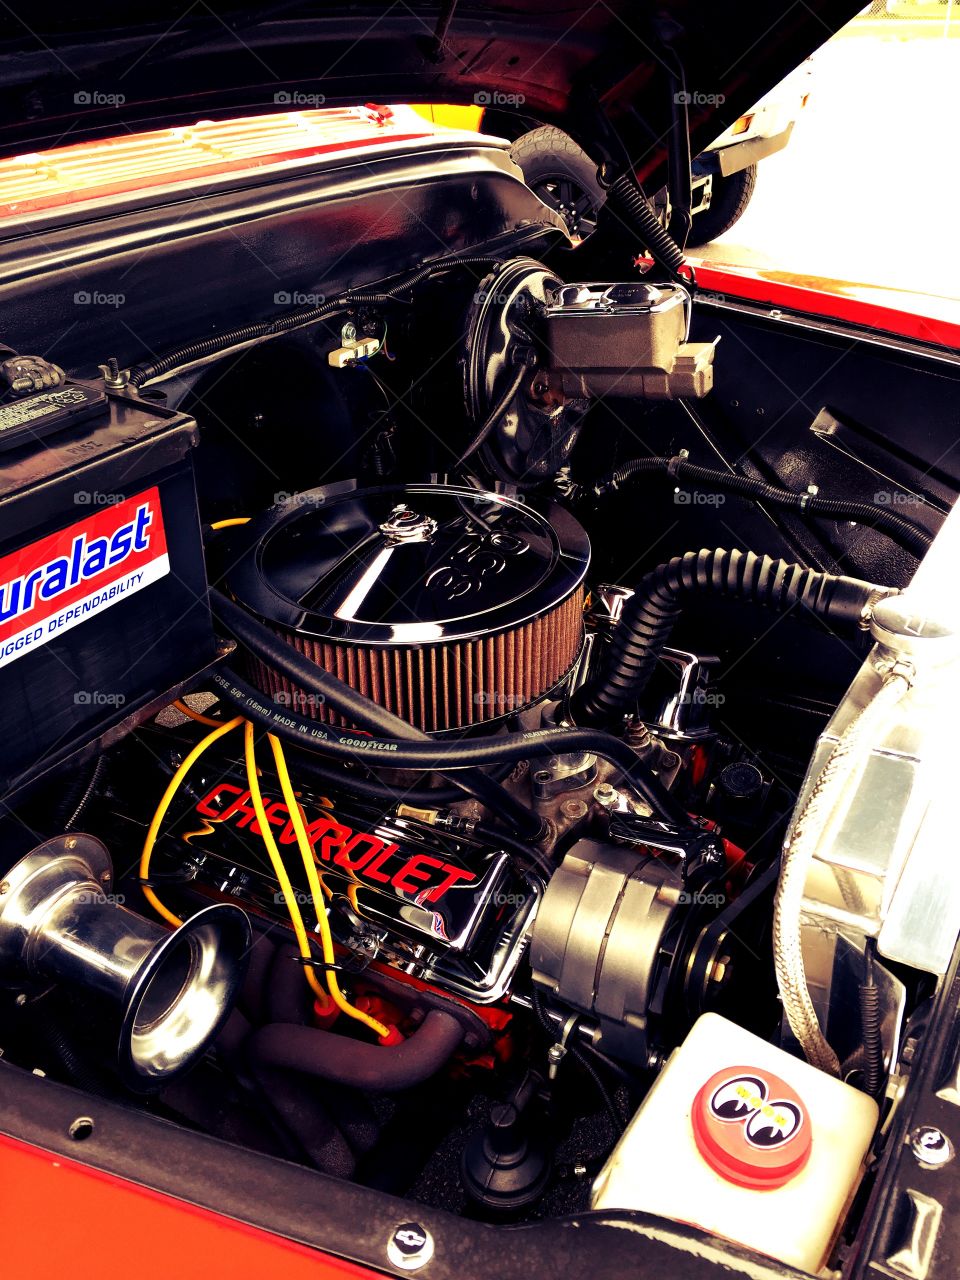 56 Chevy engine. 56 Chevy engine 